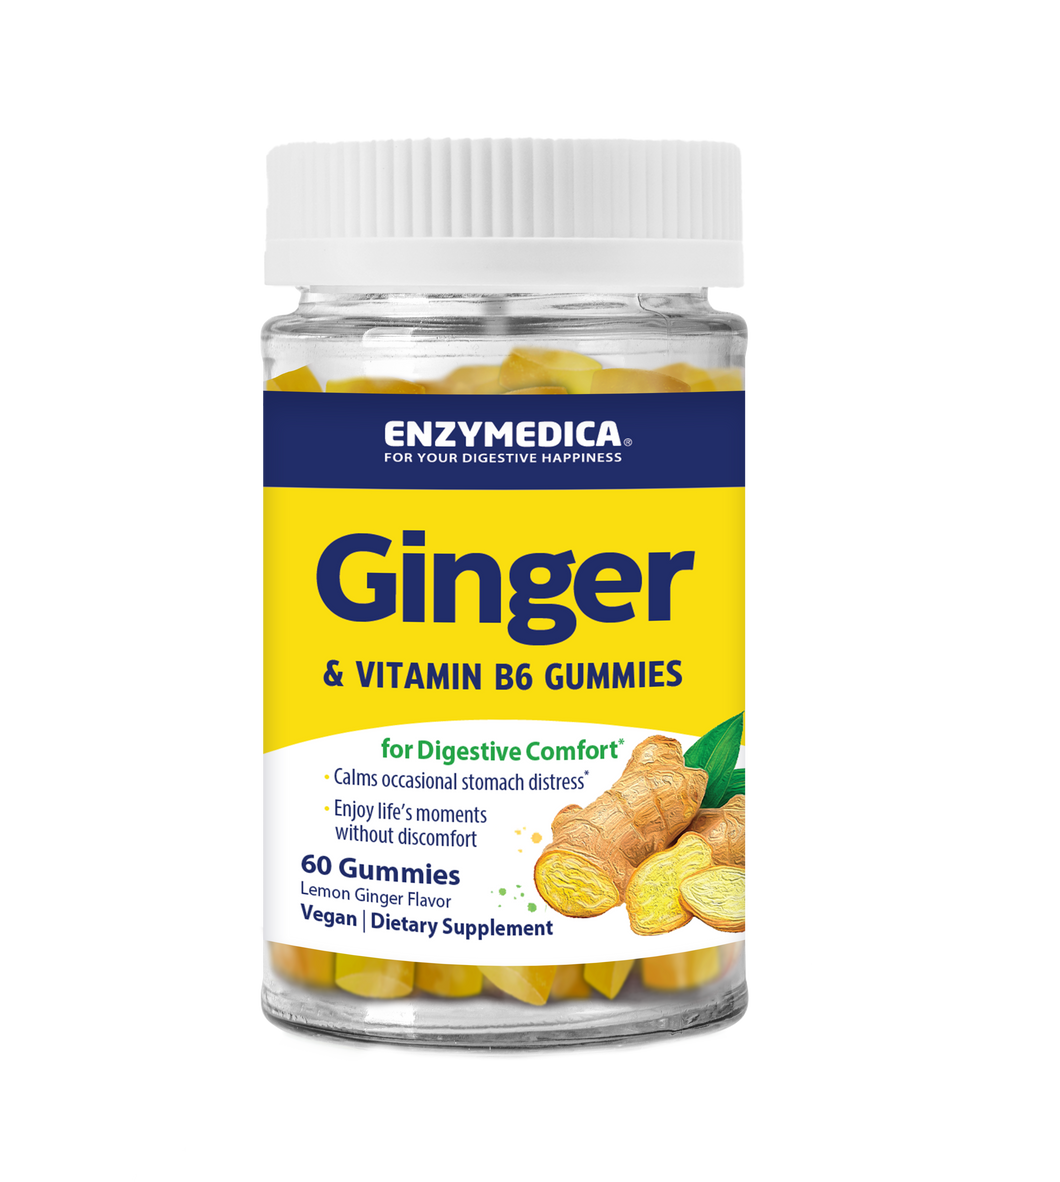 New! Ginger & Vitamin B6 Gummies